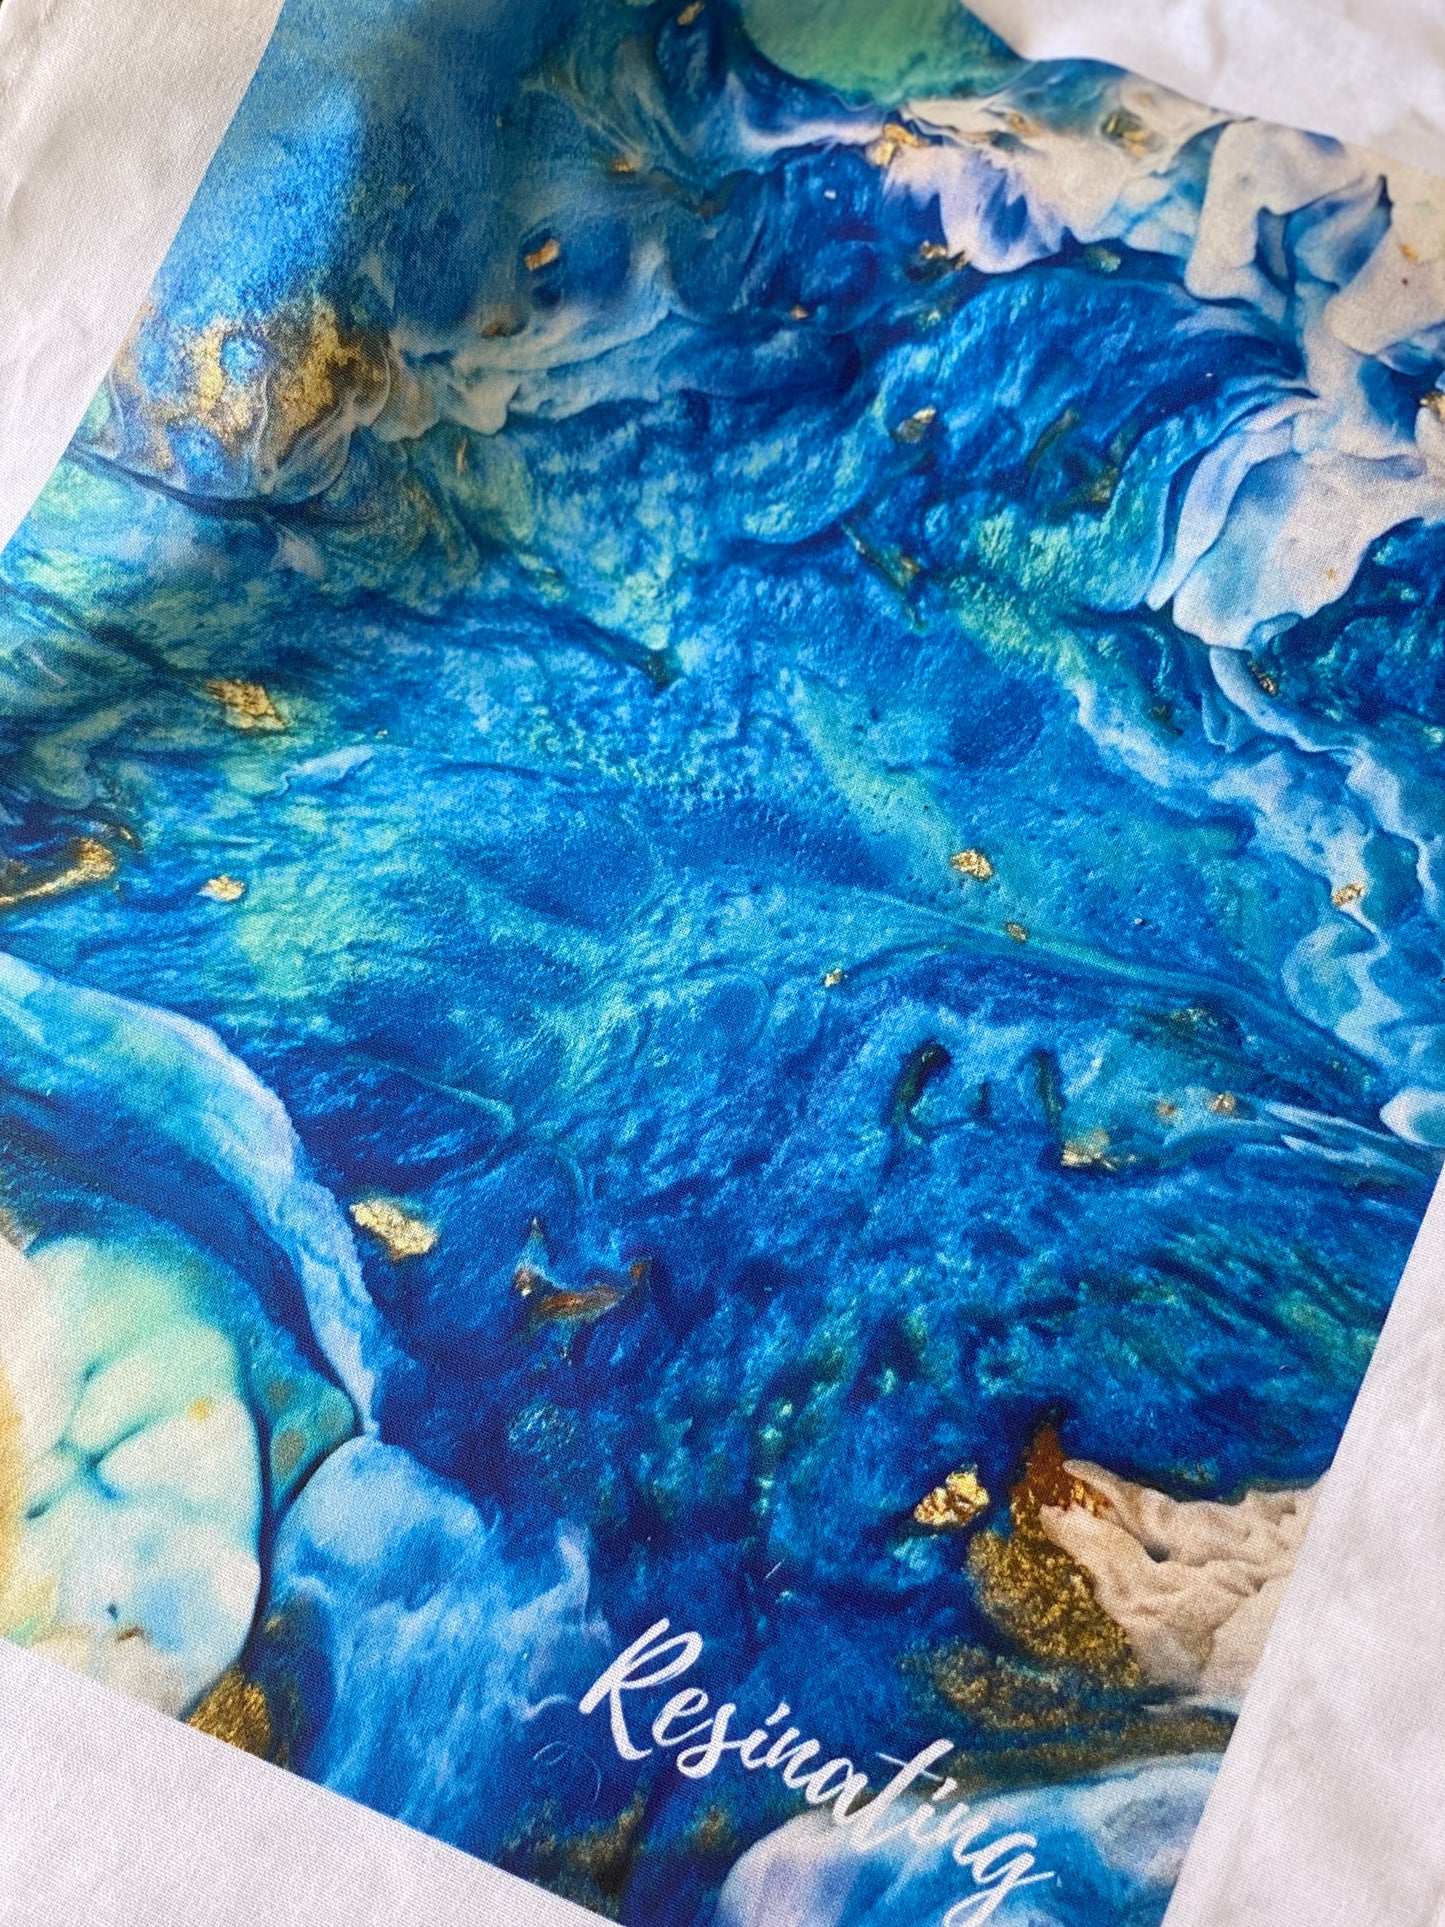 Resin art tea towel - blue resin art